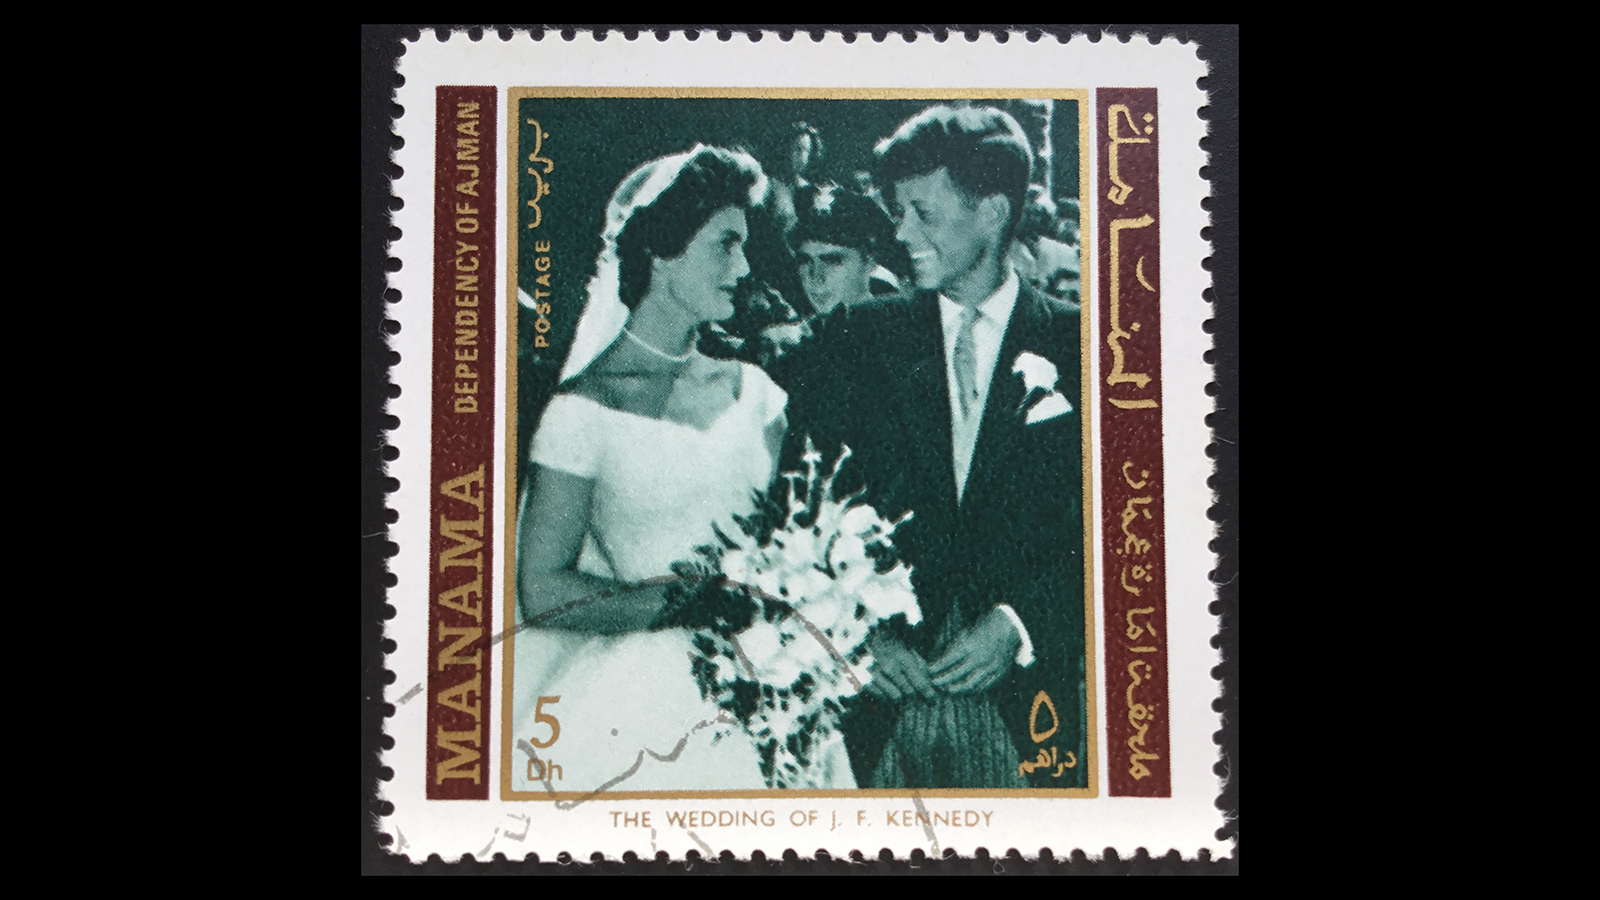 Manama, year 1971, stamp dedicated to the wedding of J. F. Kennedy